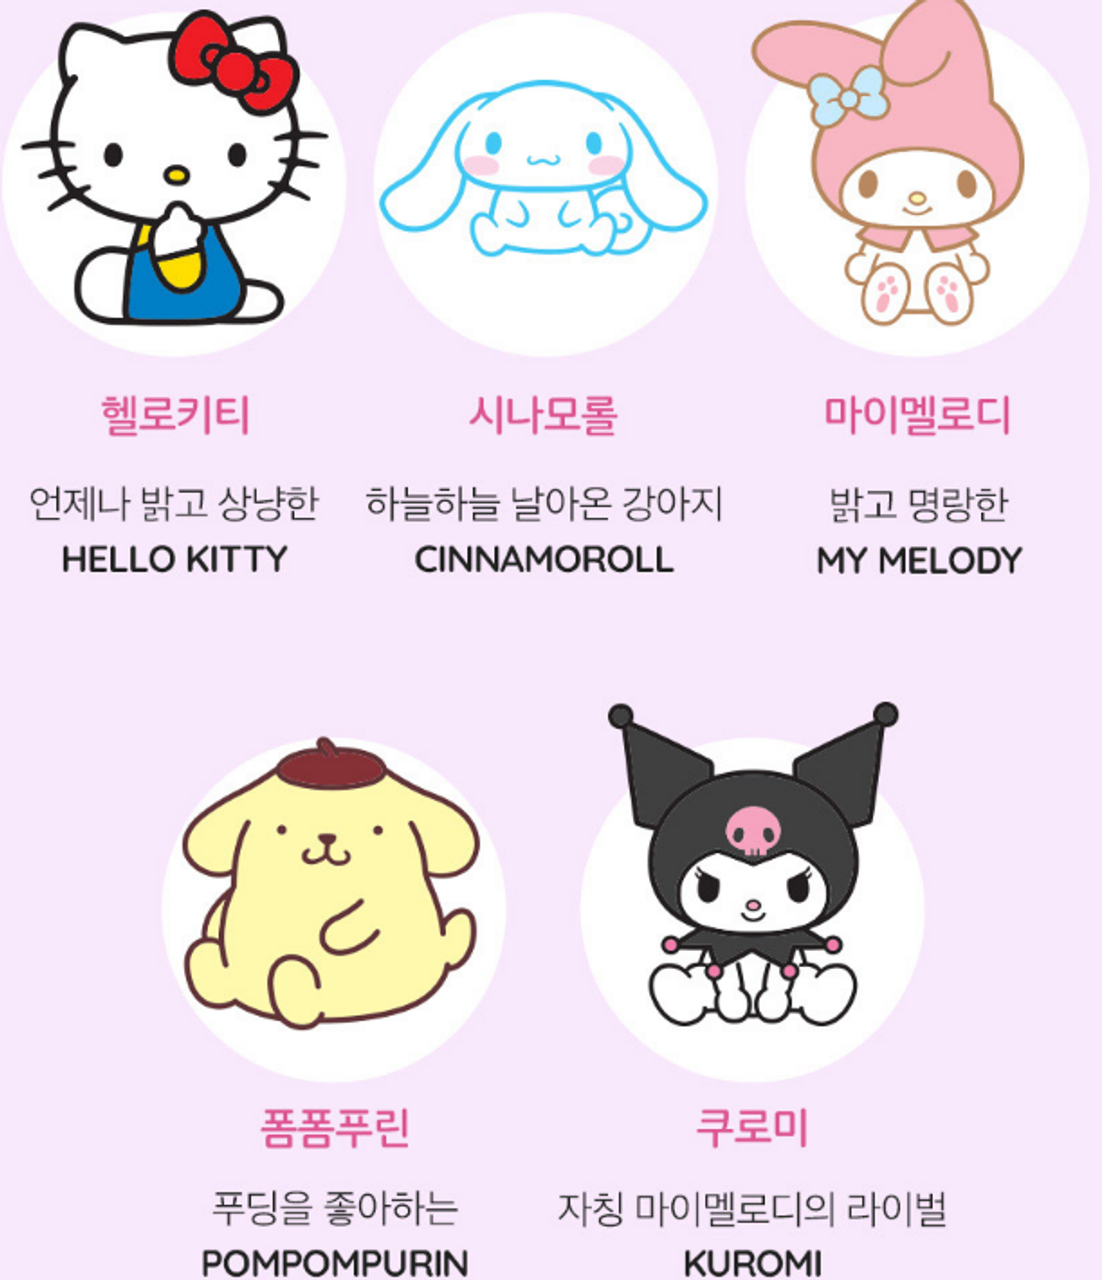 Hello Kitty & Sanrio Characters